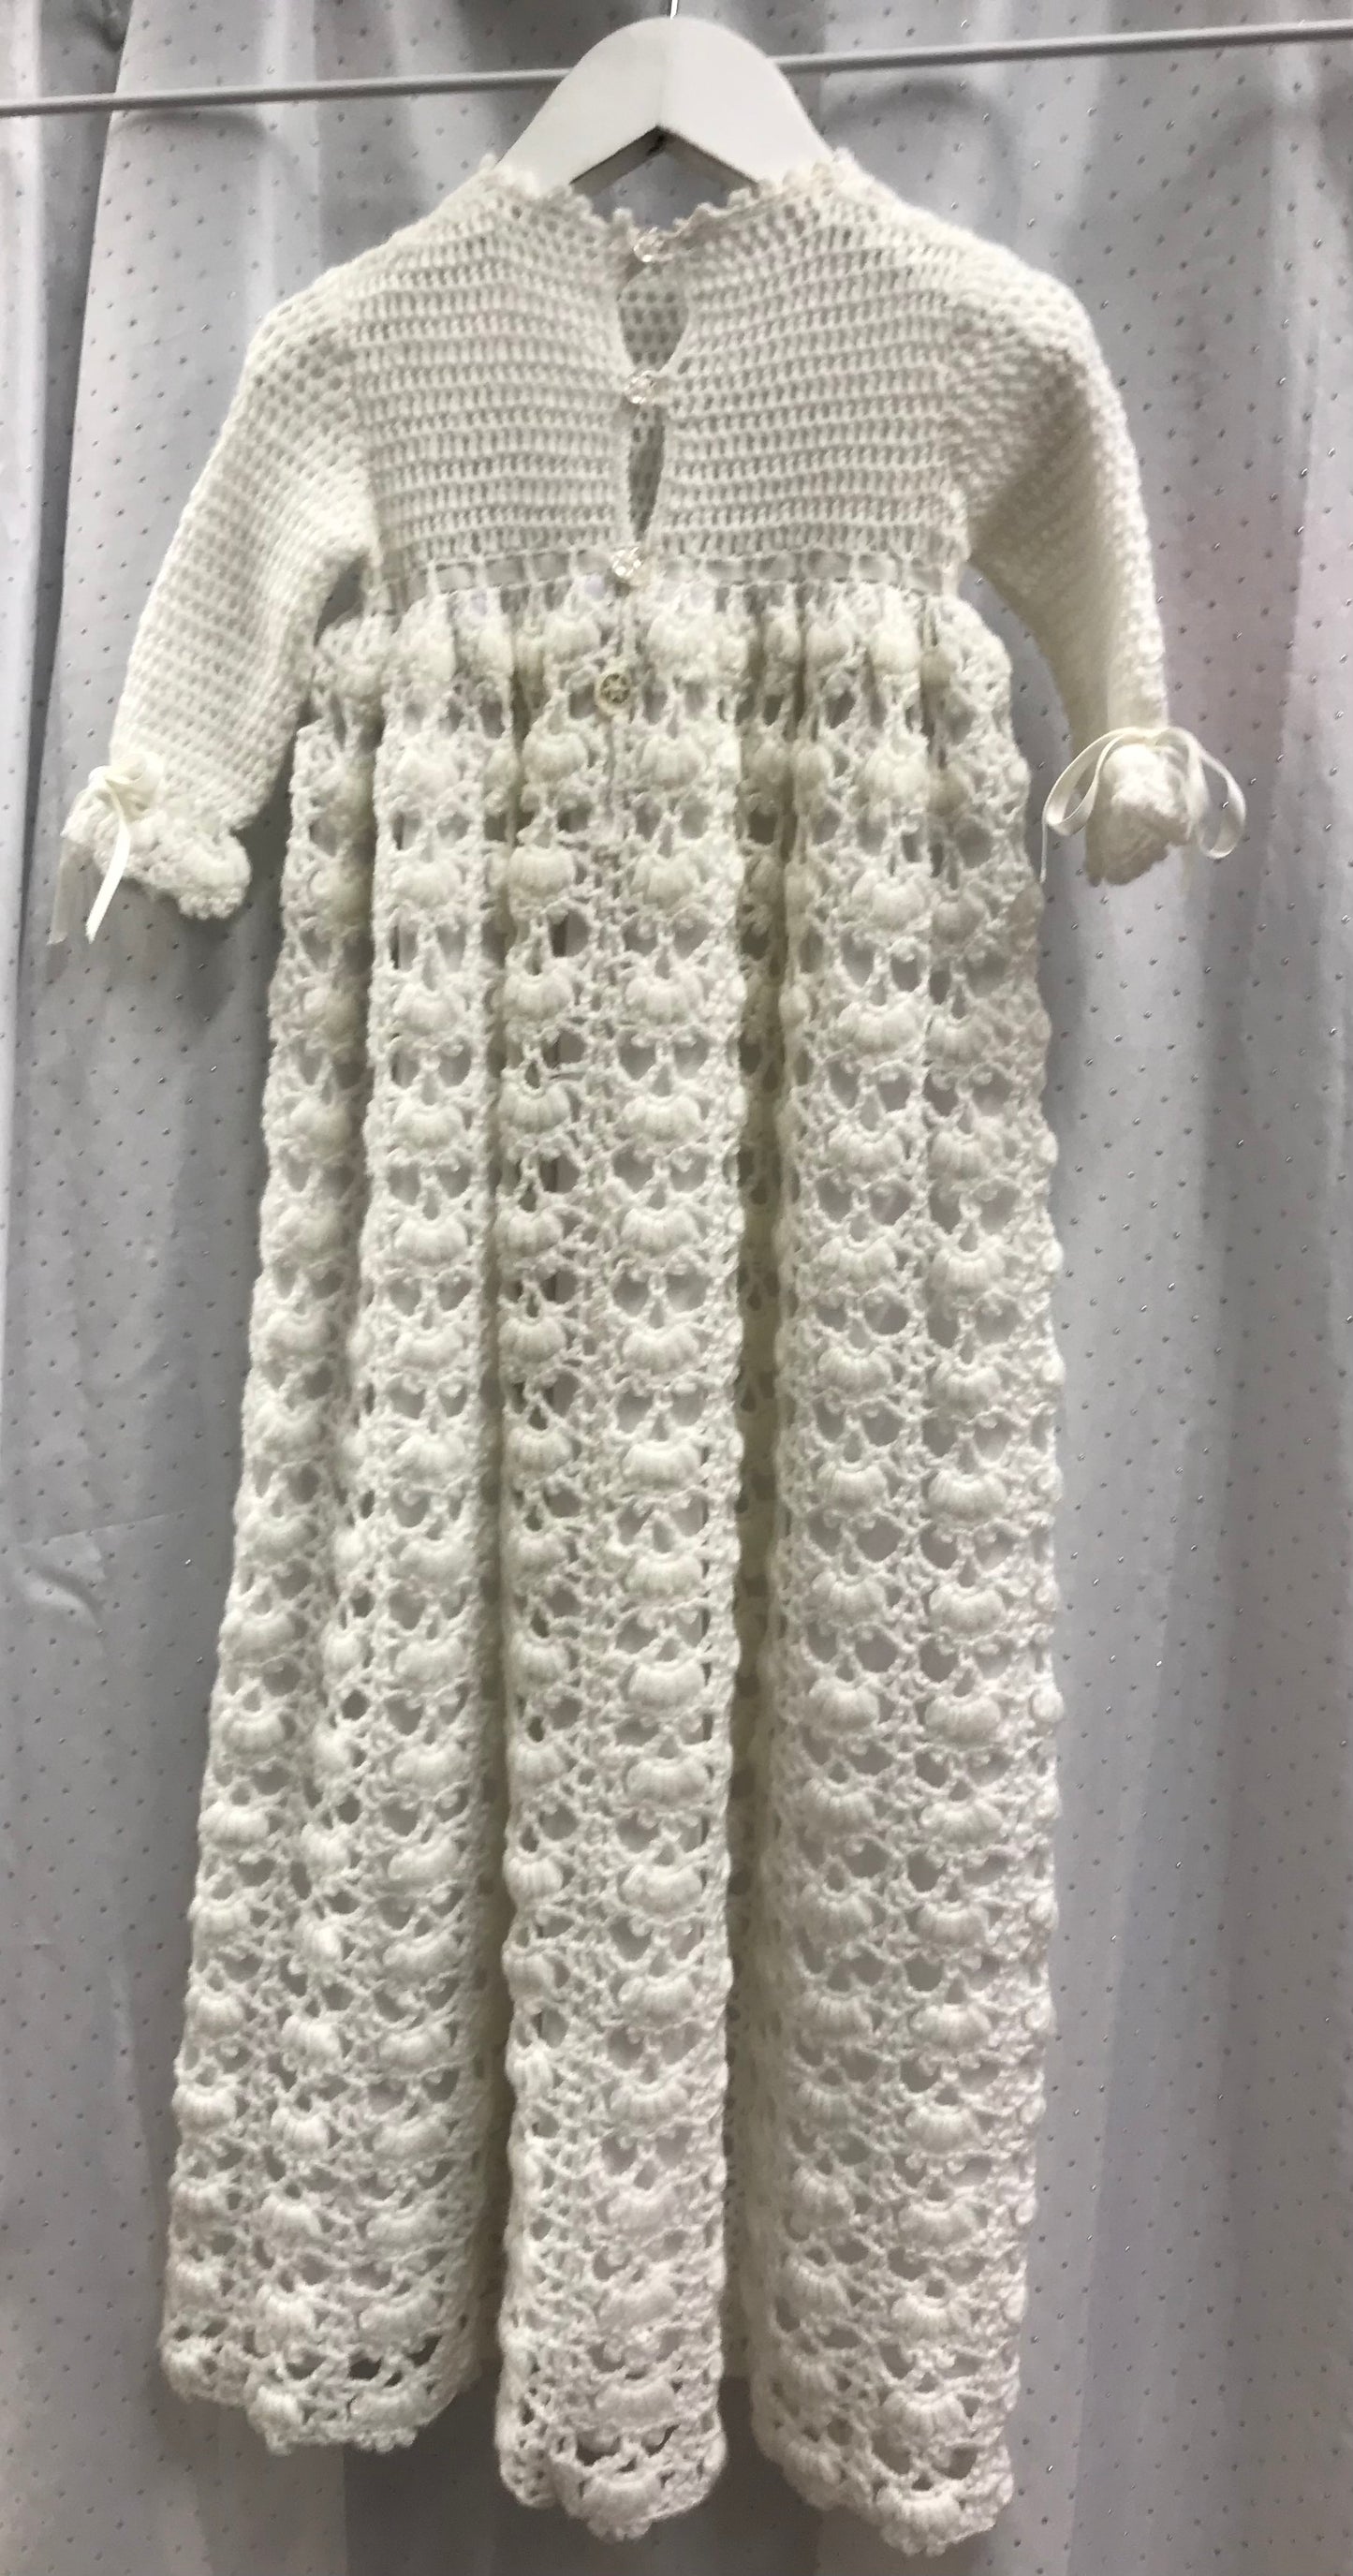 Handmade White Crocheted Lined Christening Gown